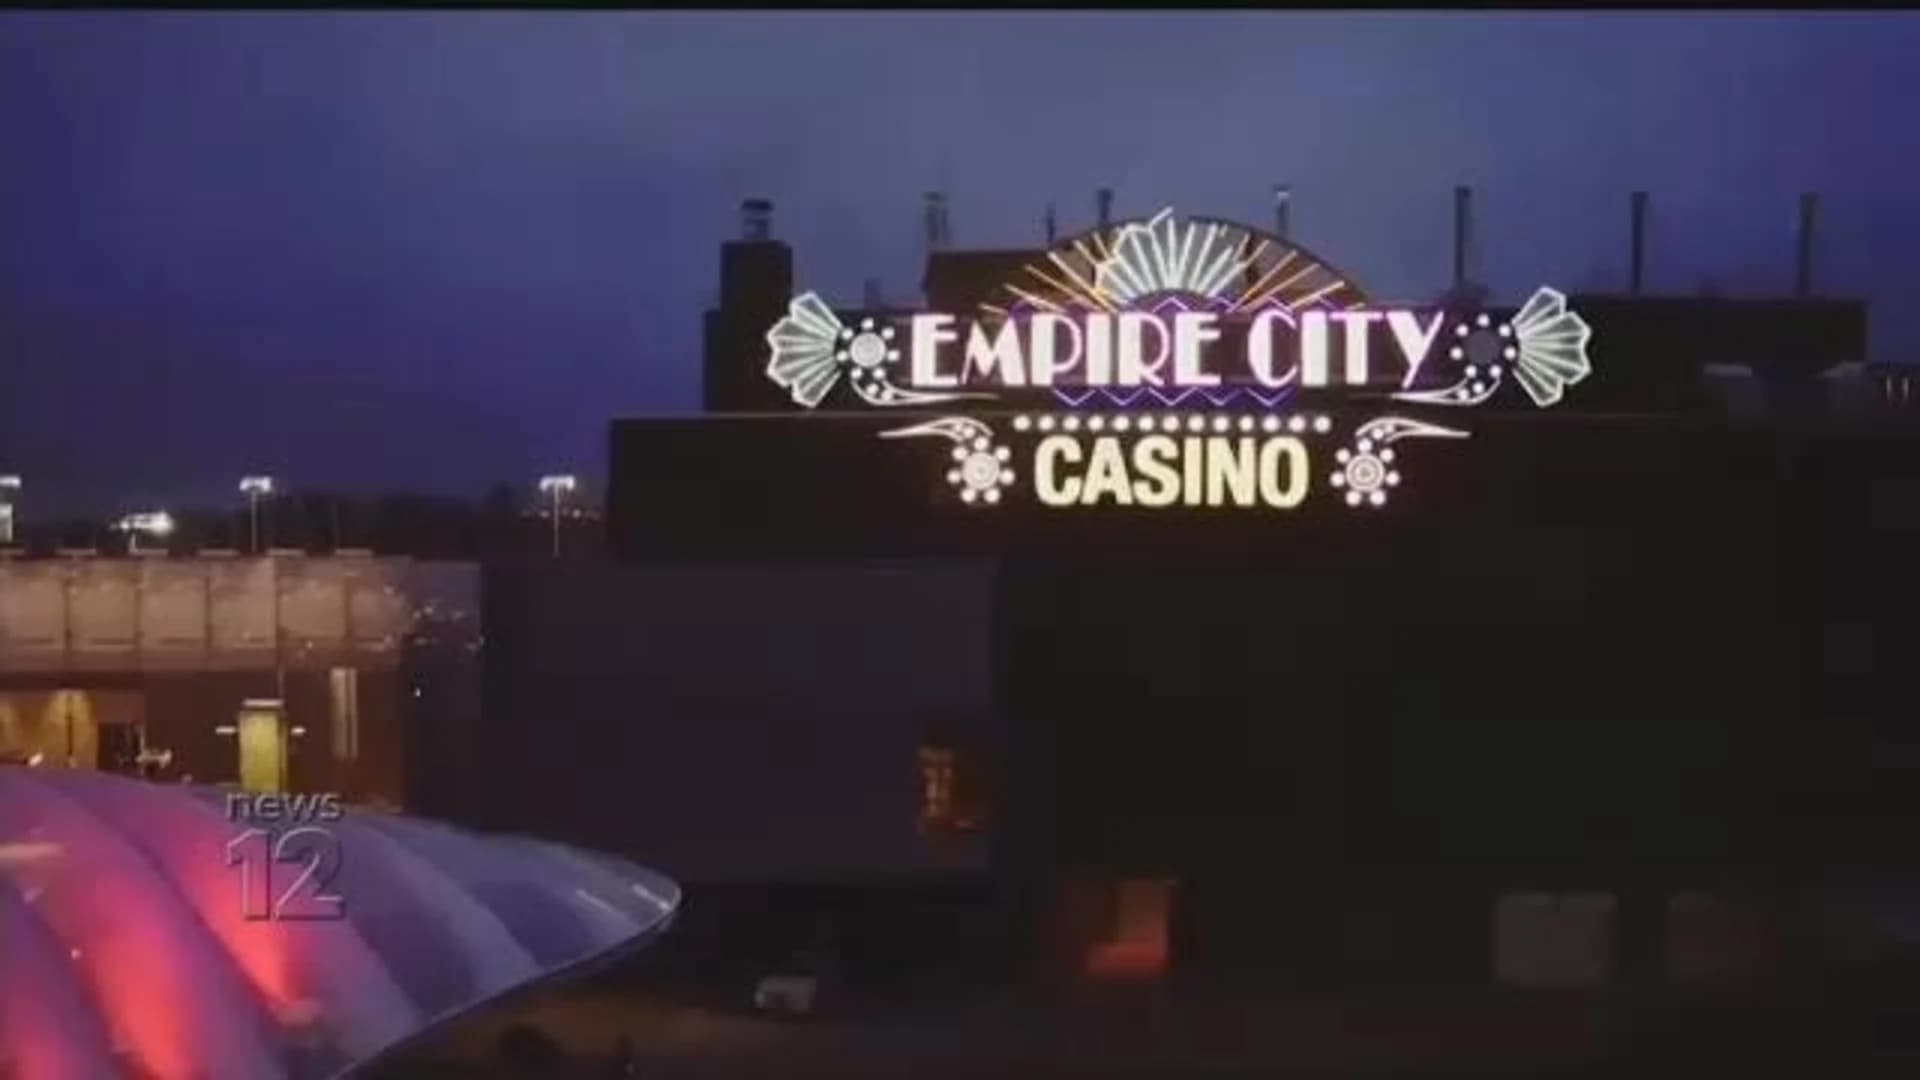 Empire City Casino closes due to coronavirus concerns